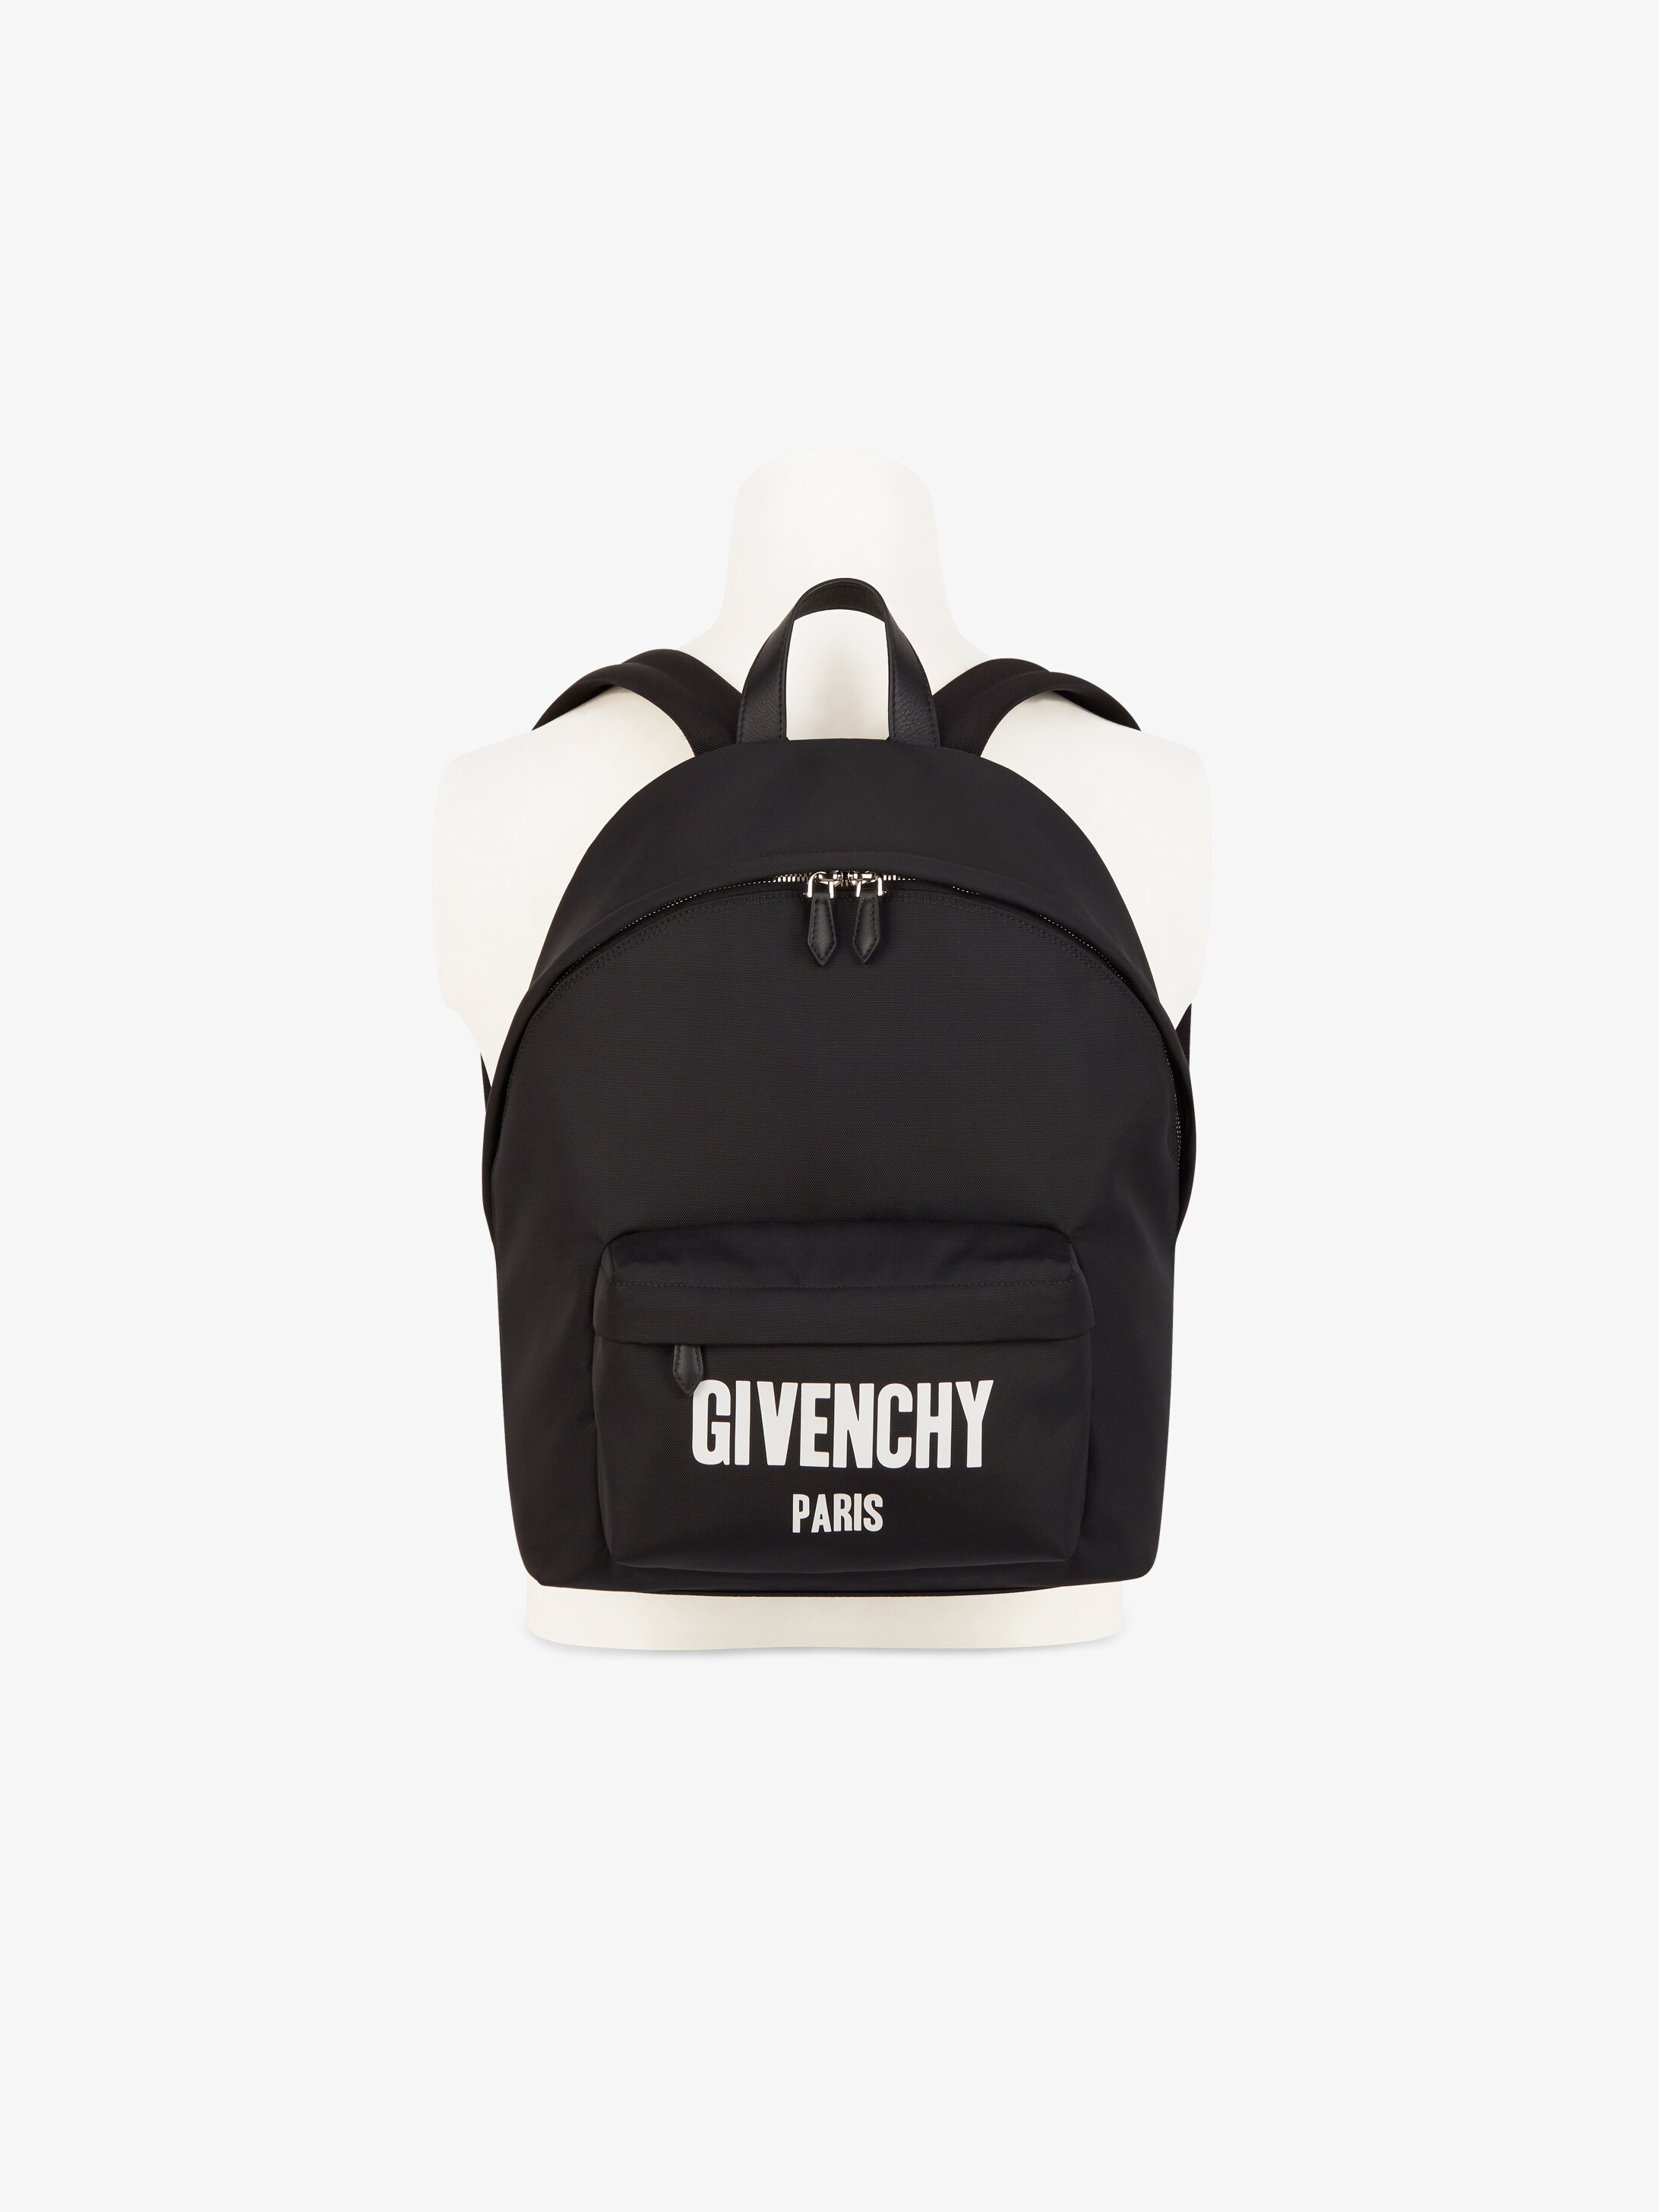 givenchy paris backpack